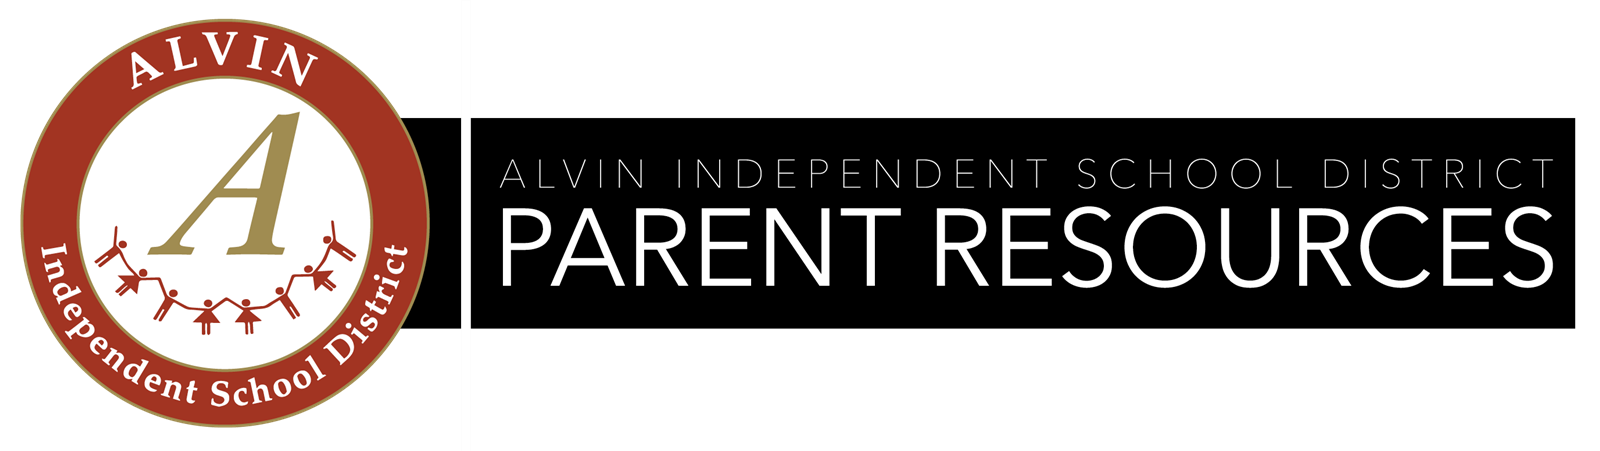 parent resources banner